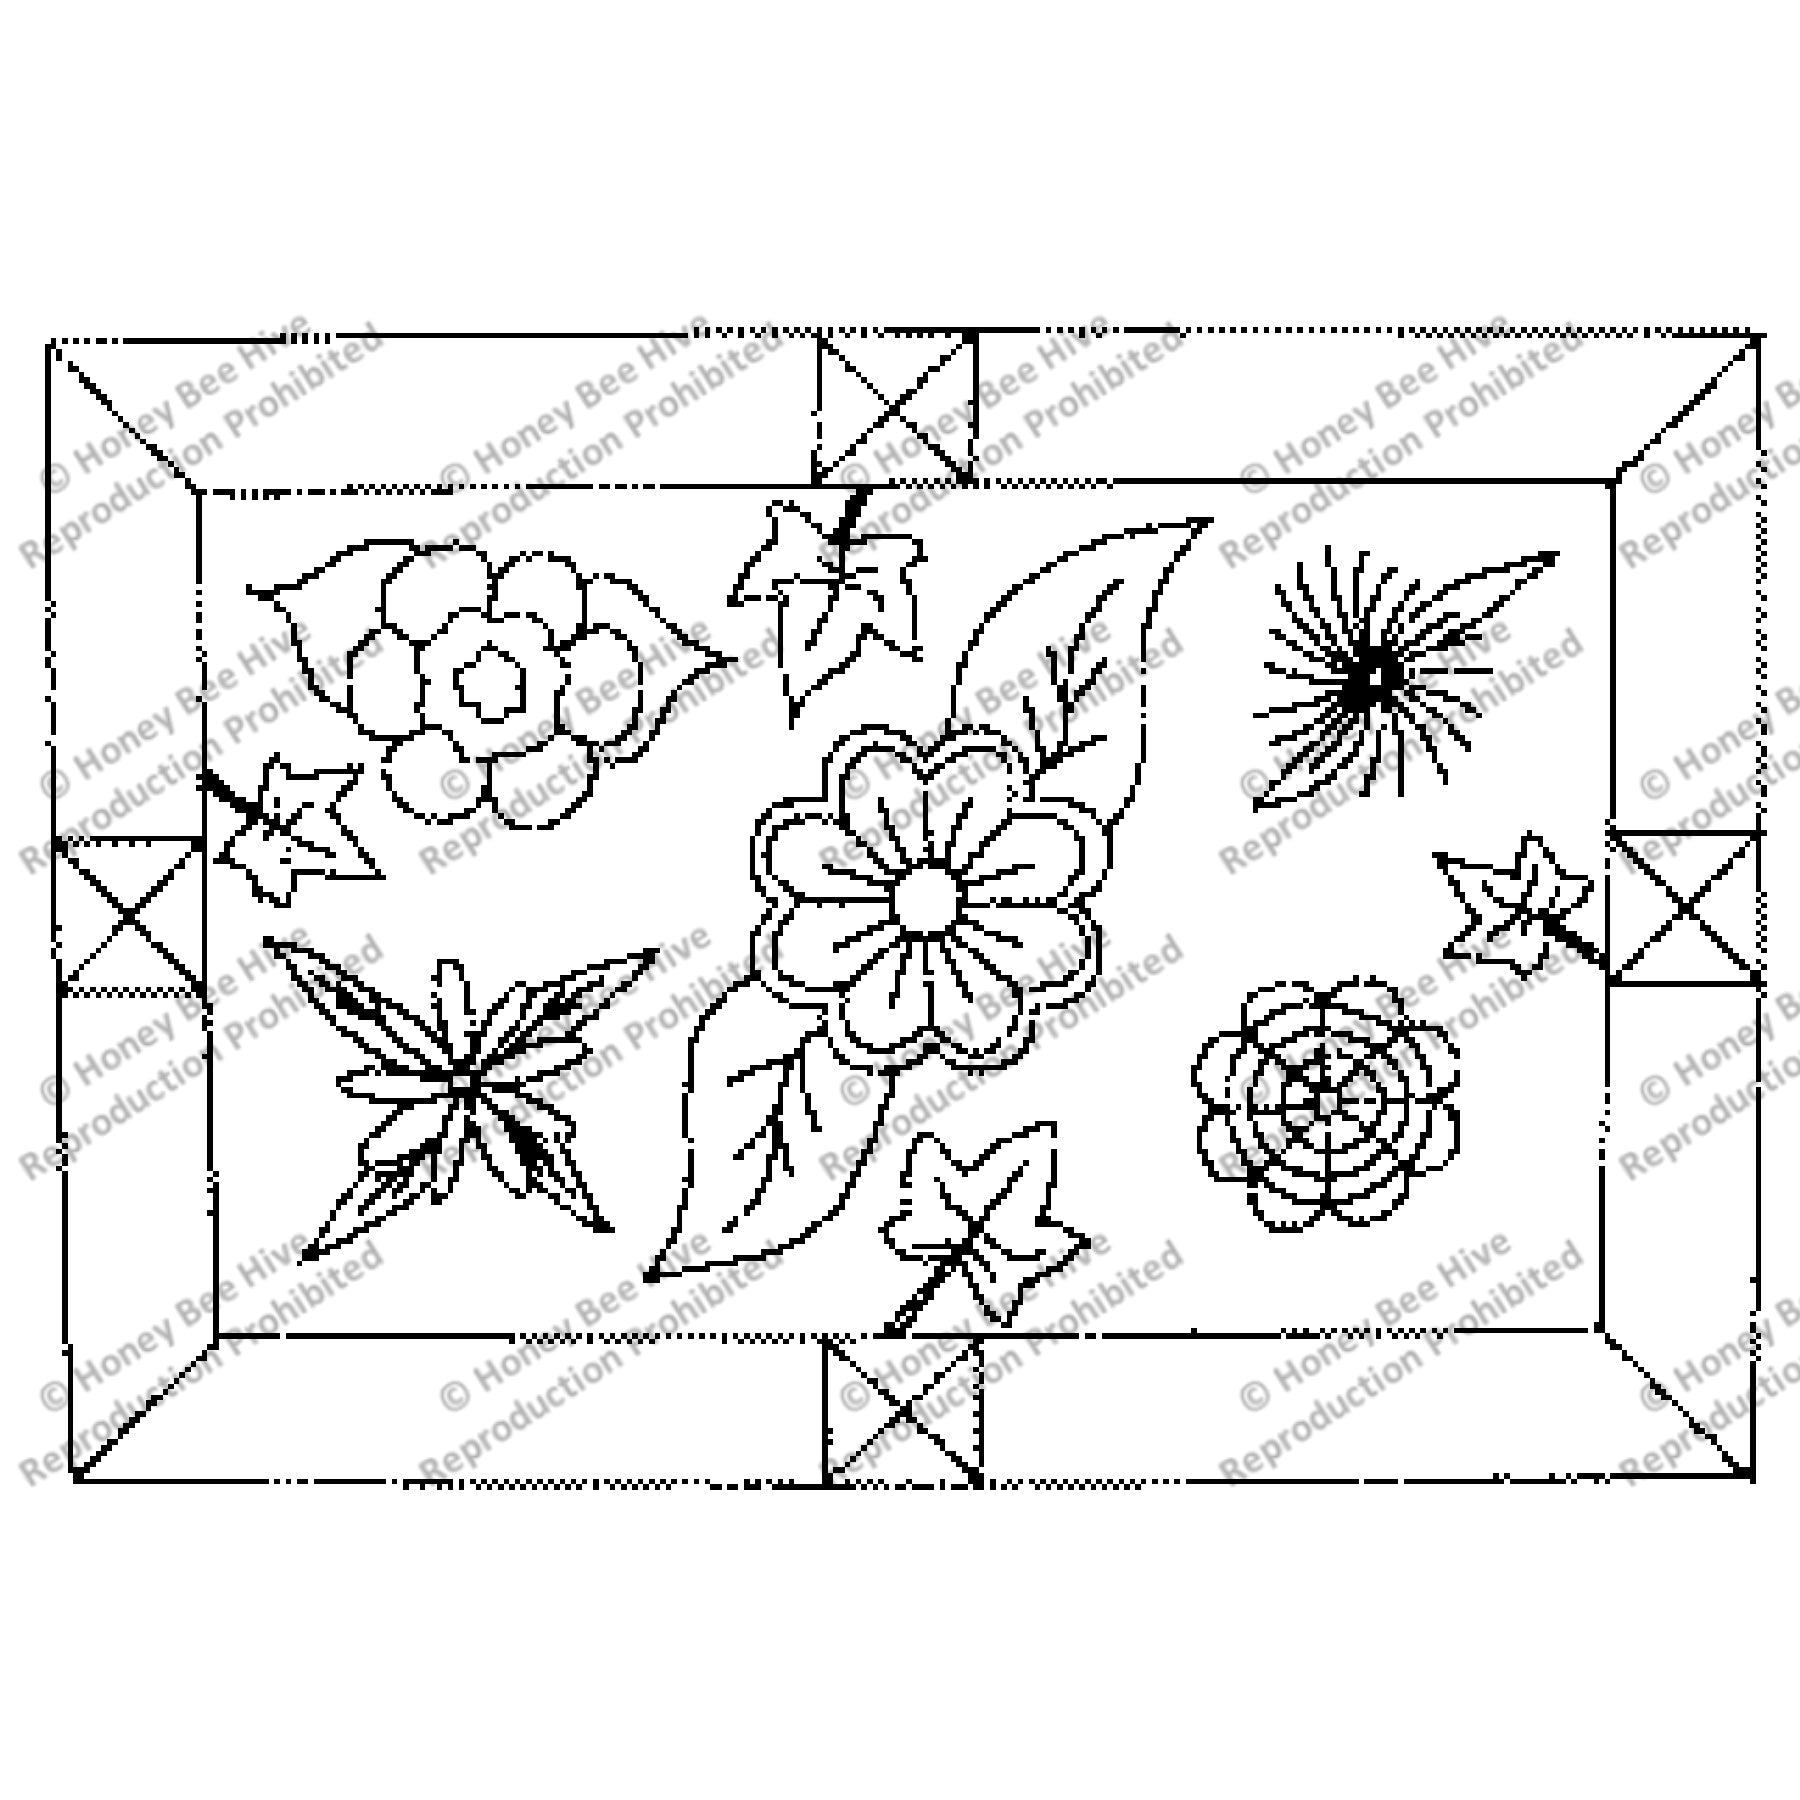 Padula And Leaves, rug hooking pattern